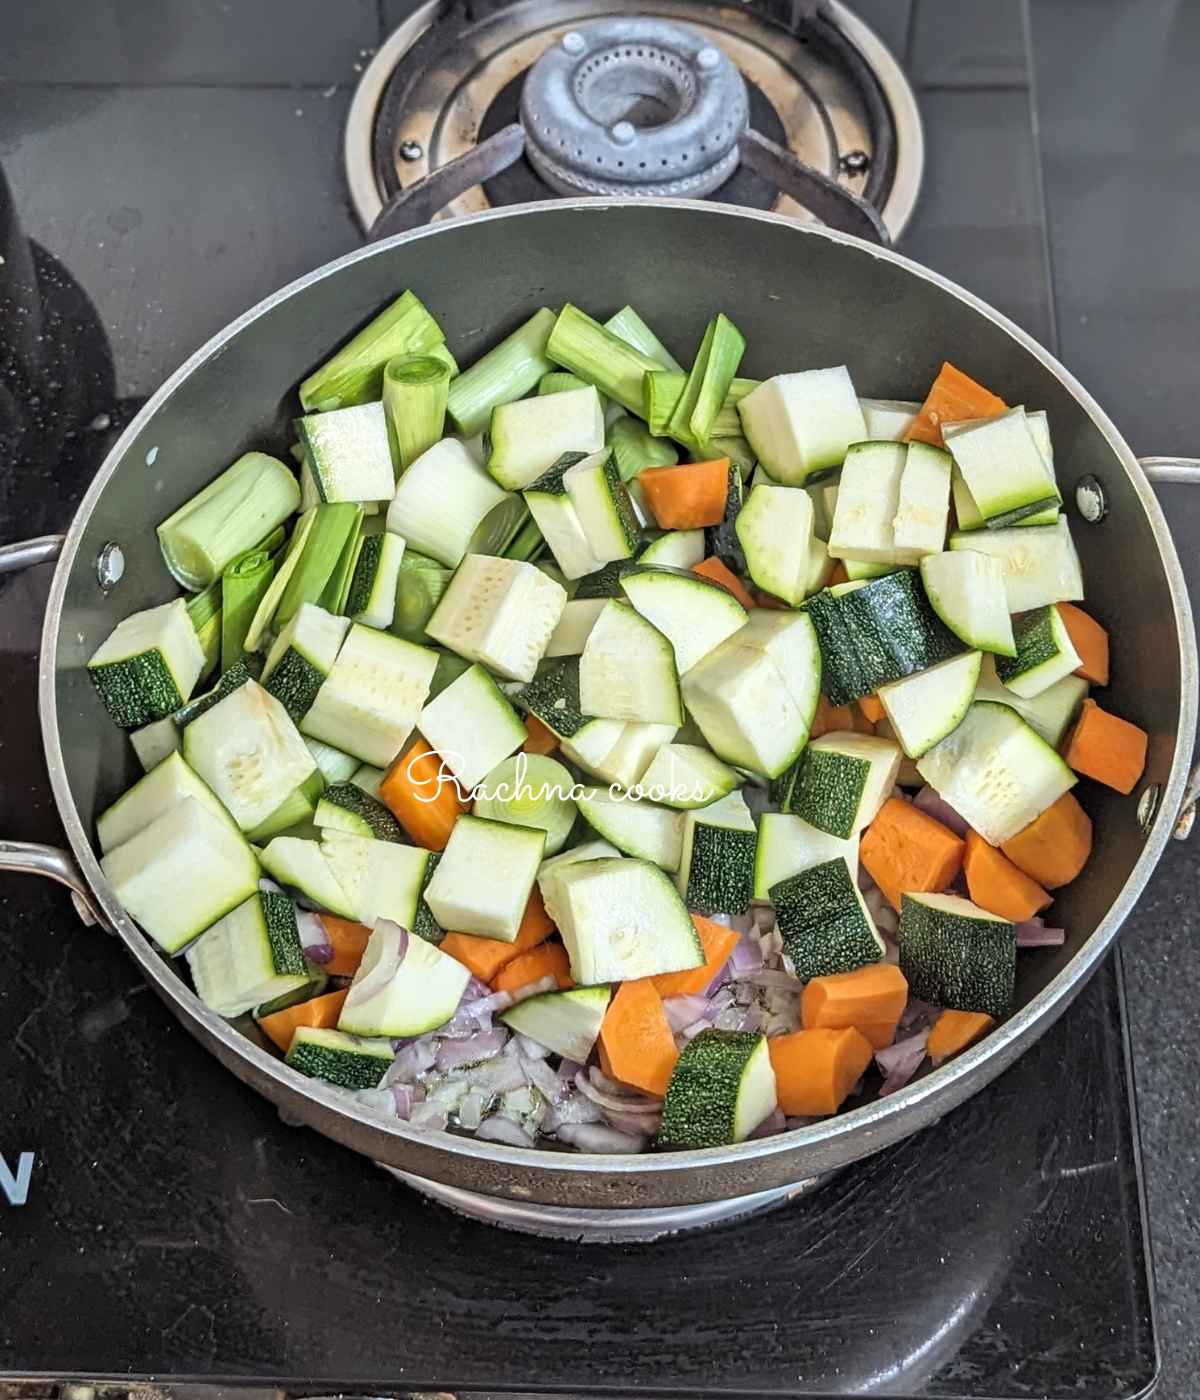 Pan with onion, garlic, leeks, zucchini, carrots and cauliflower